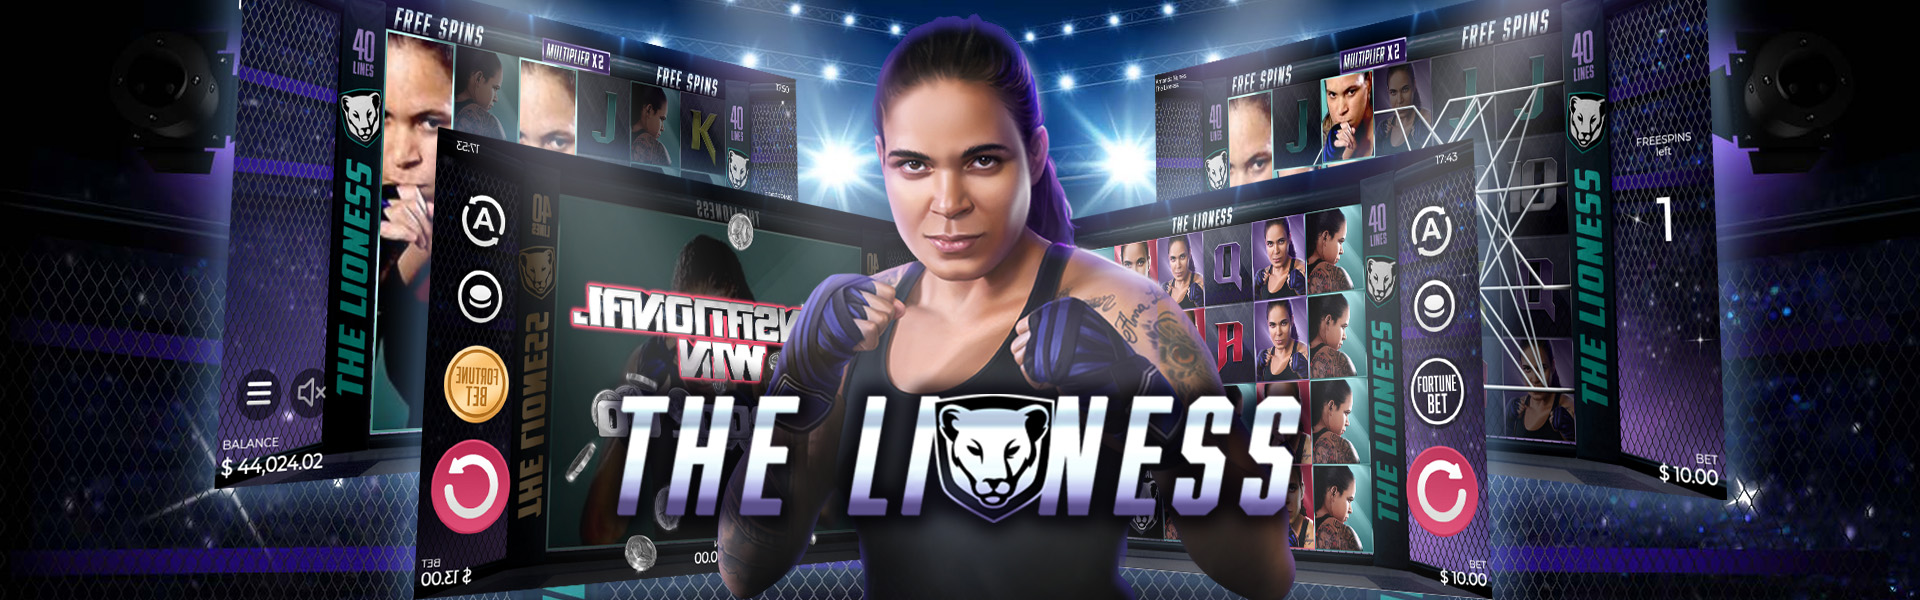 THE LIONESS with Amanda Nunes Screenshot 1